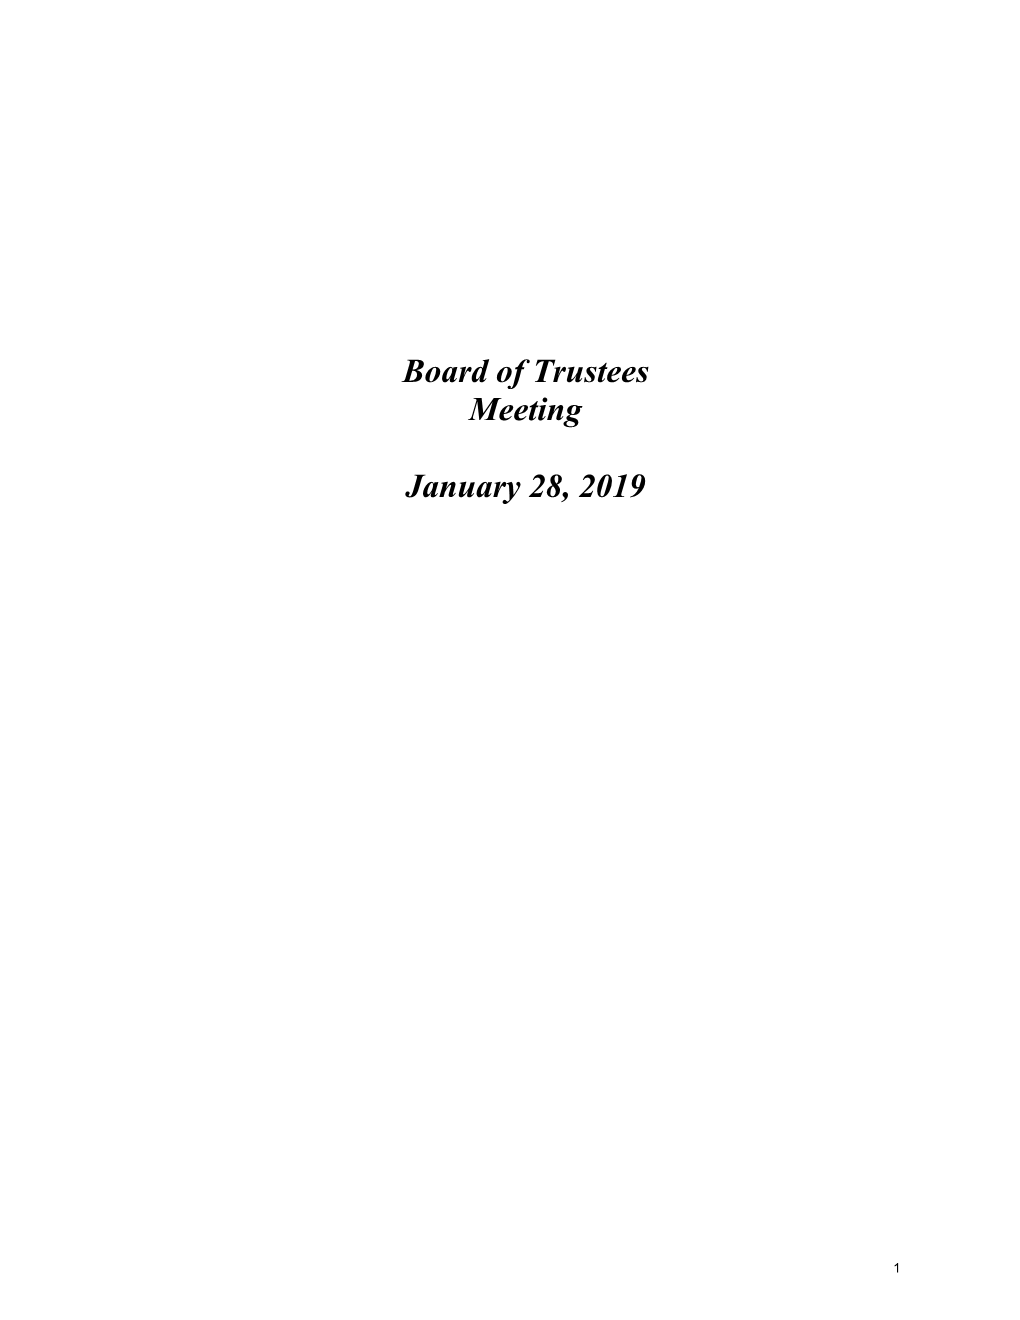 Board of Trustees Meeting January 28, 2019